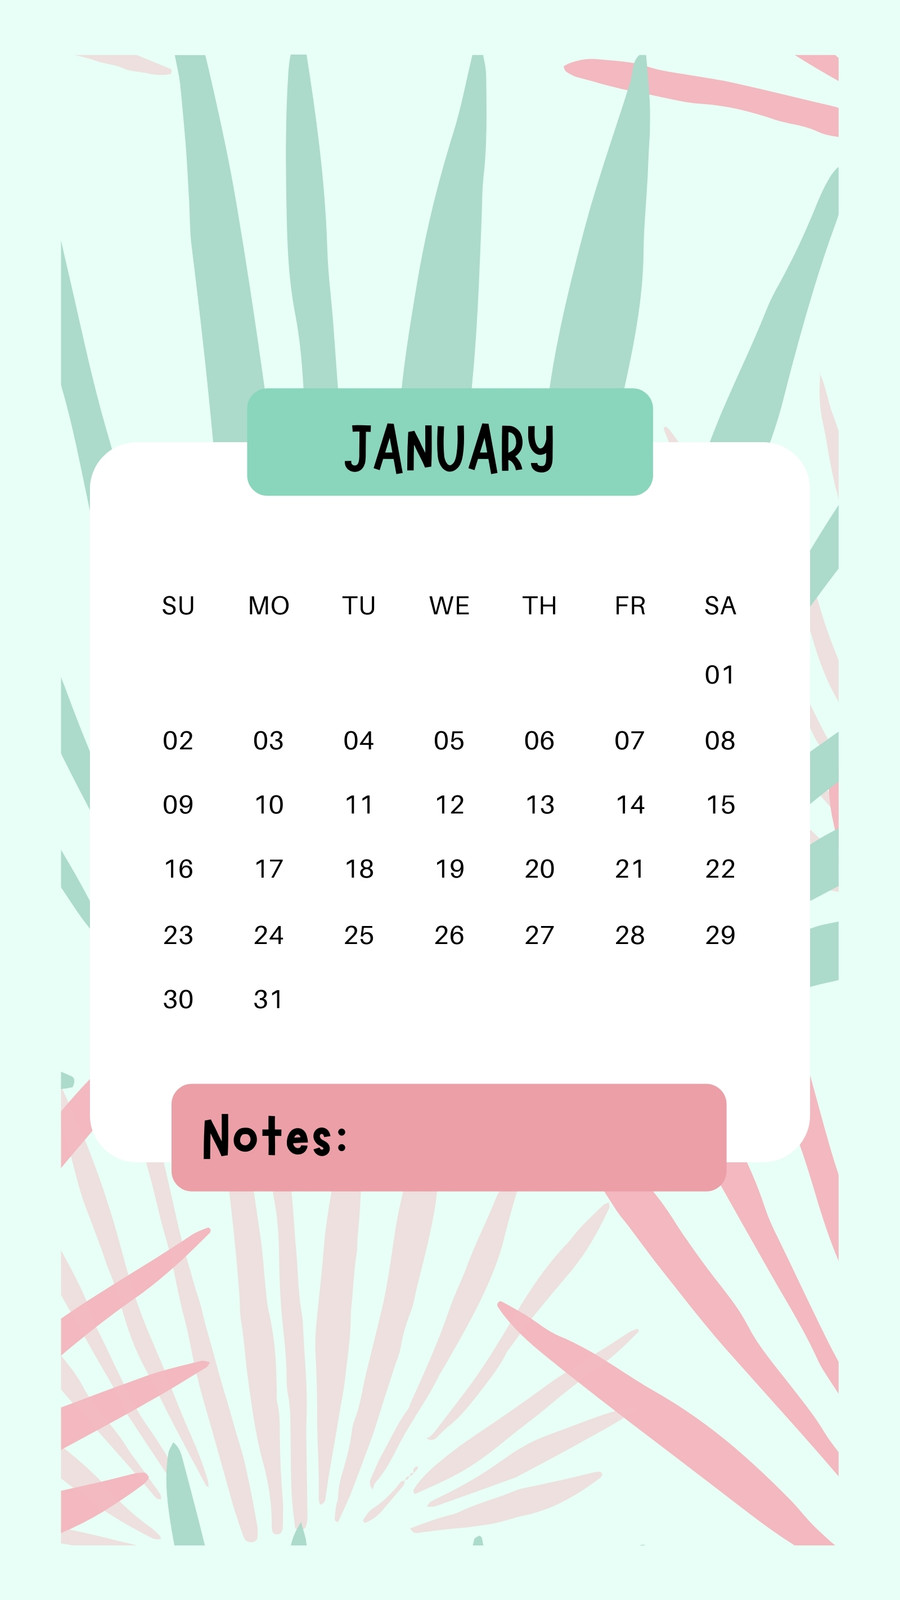 wallpaper calendar january 2022